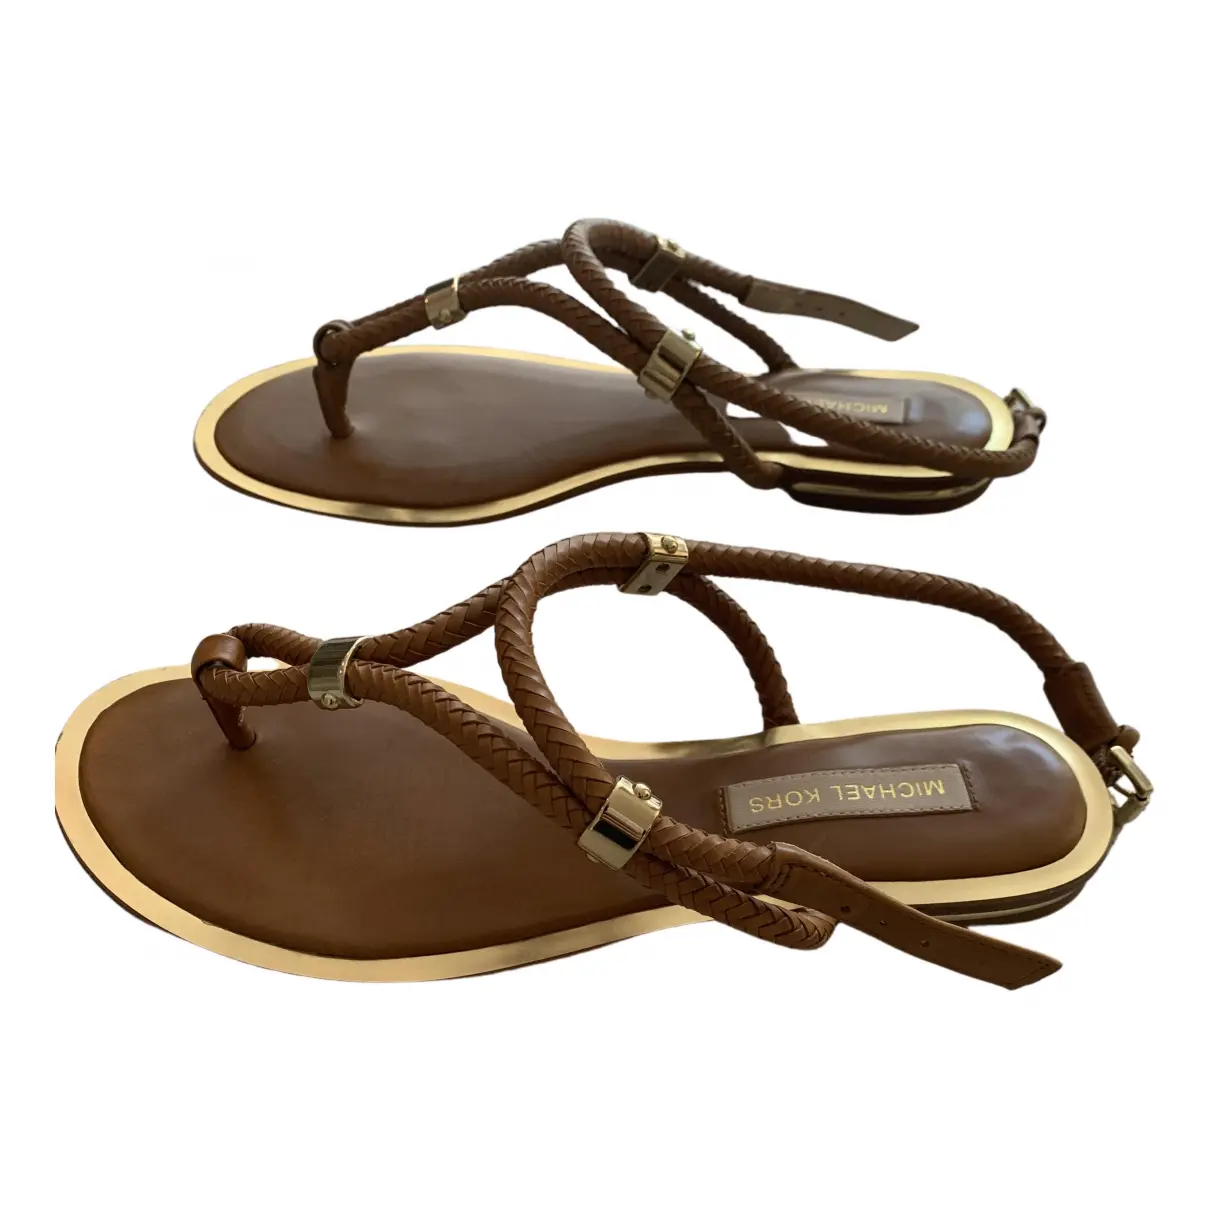 Leather sandals Michael Kors